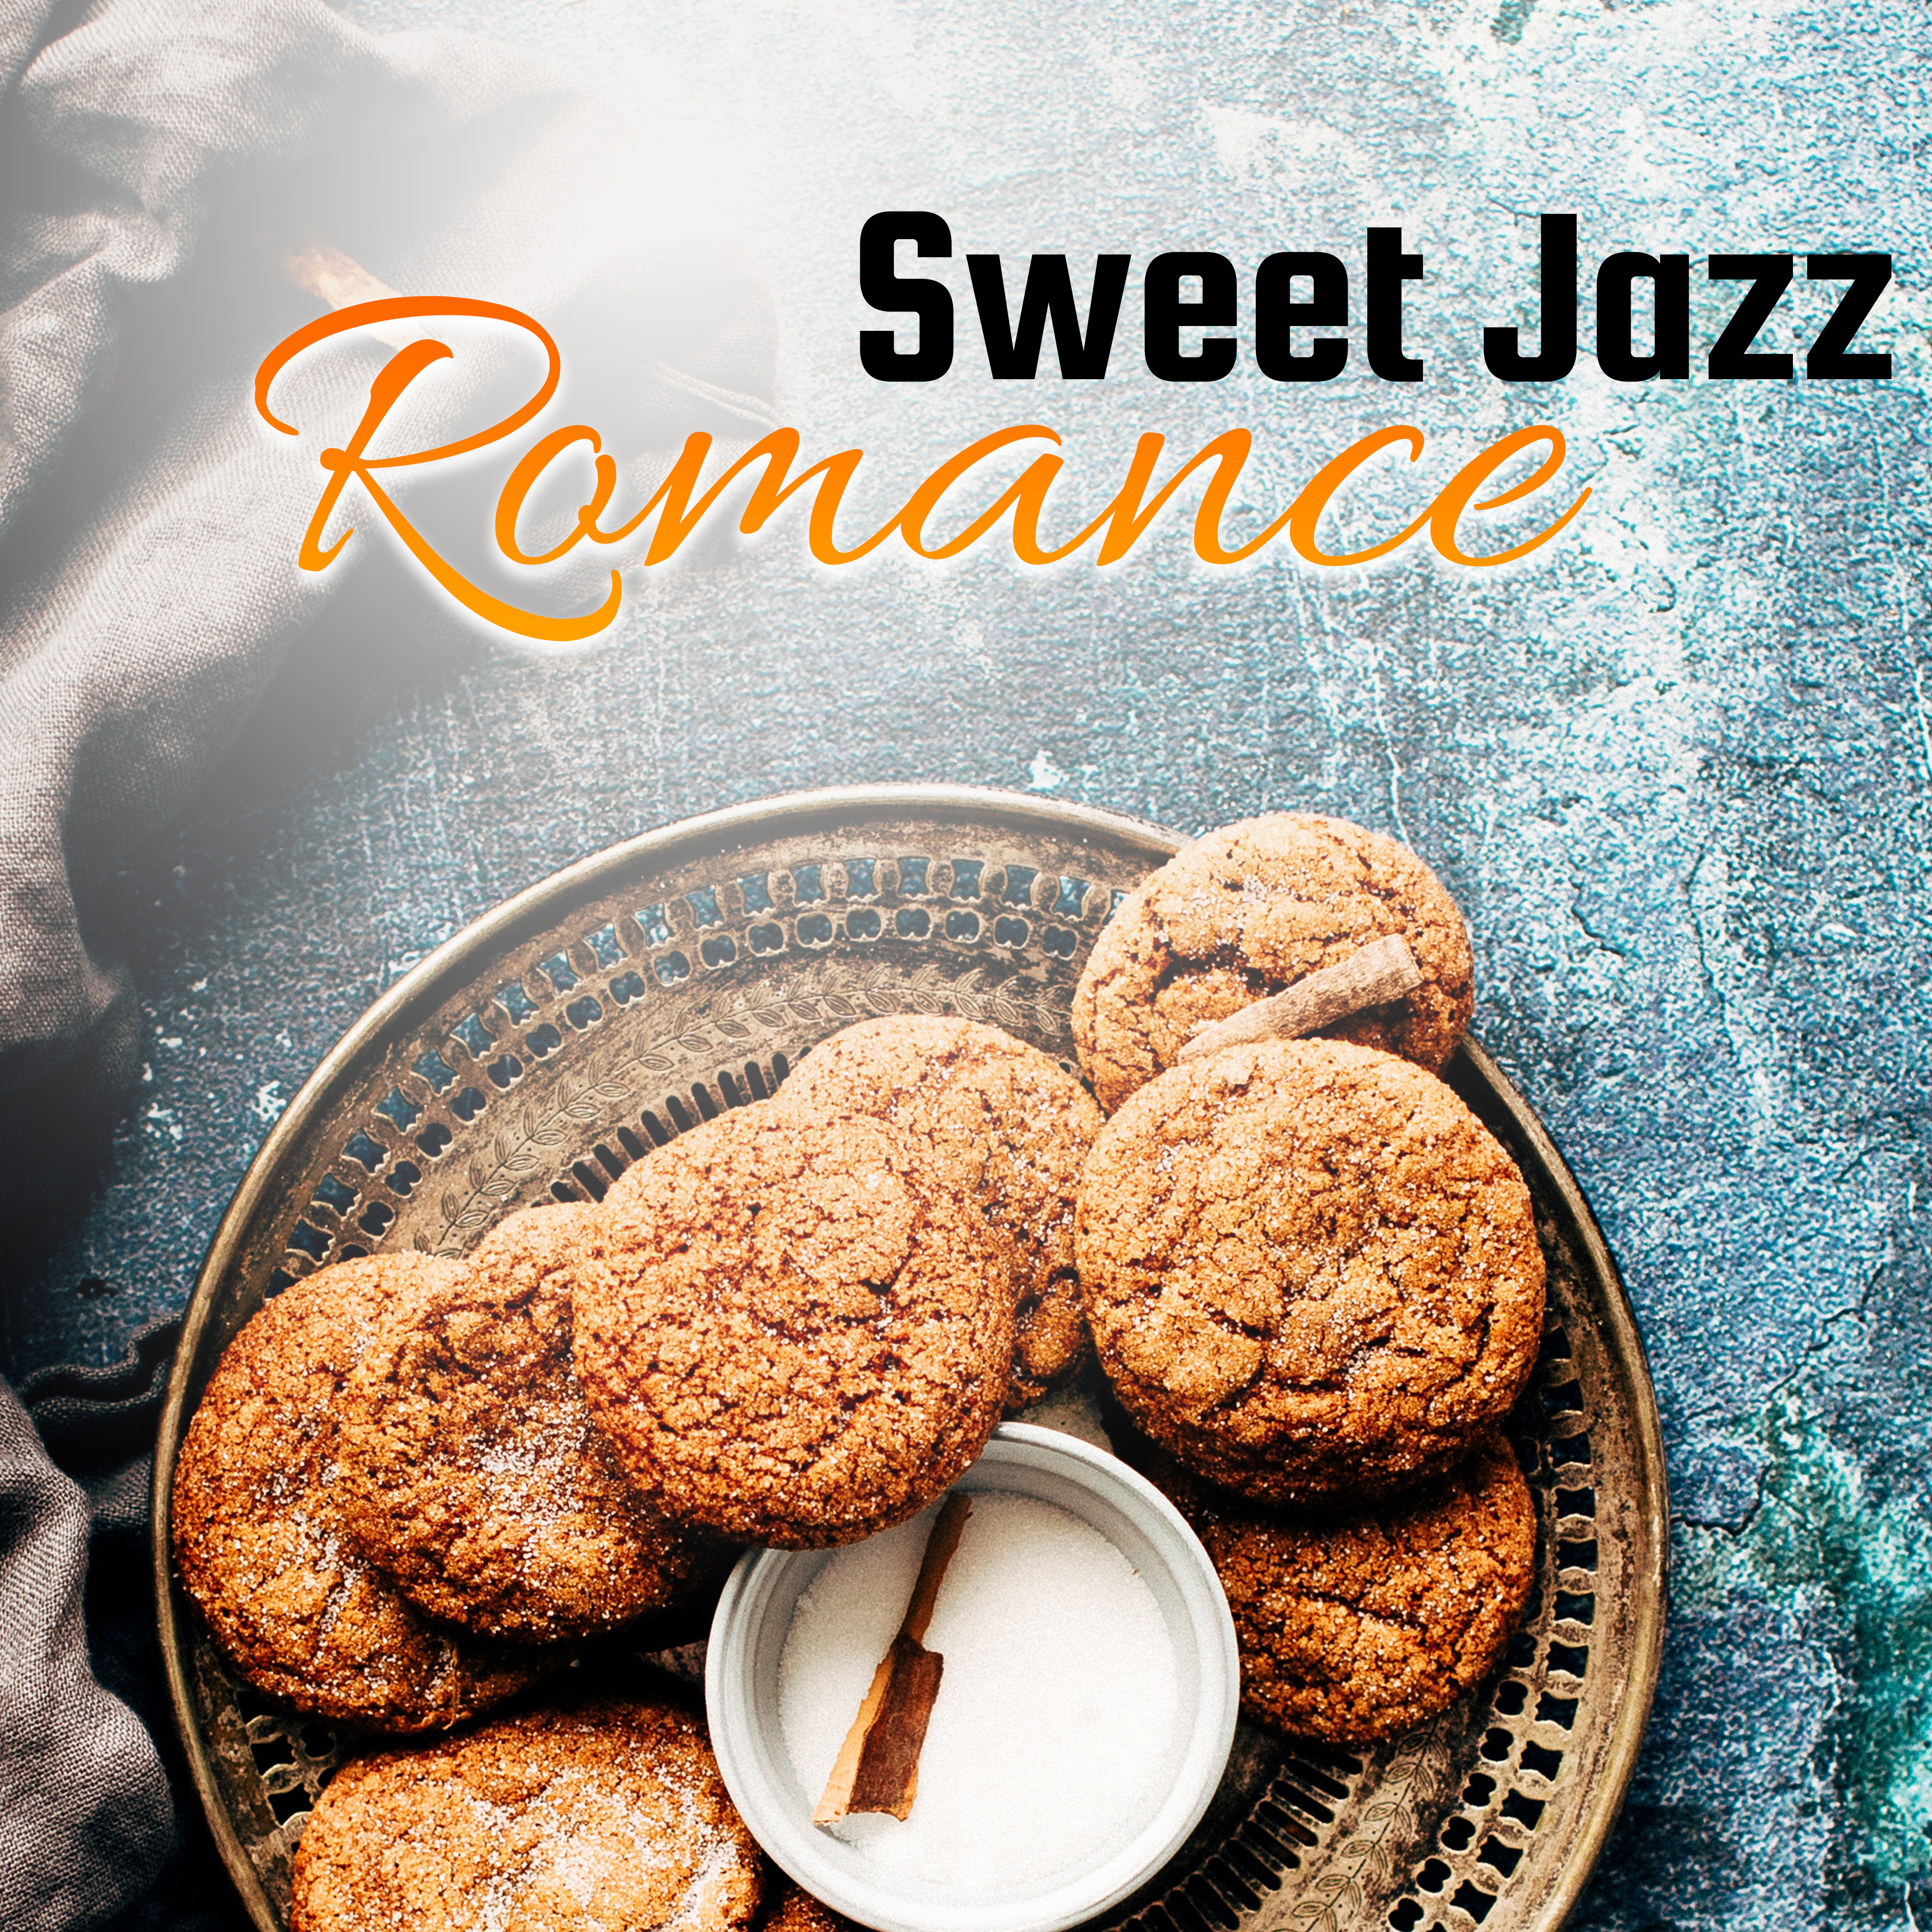 Sweet Jazz Romance  Romantic Music, Sweet Melodies of  Jazz 2017,  Chilled Jazz, Relax